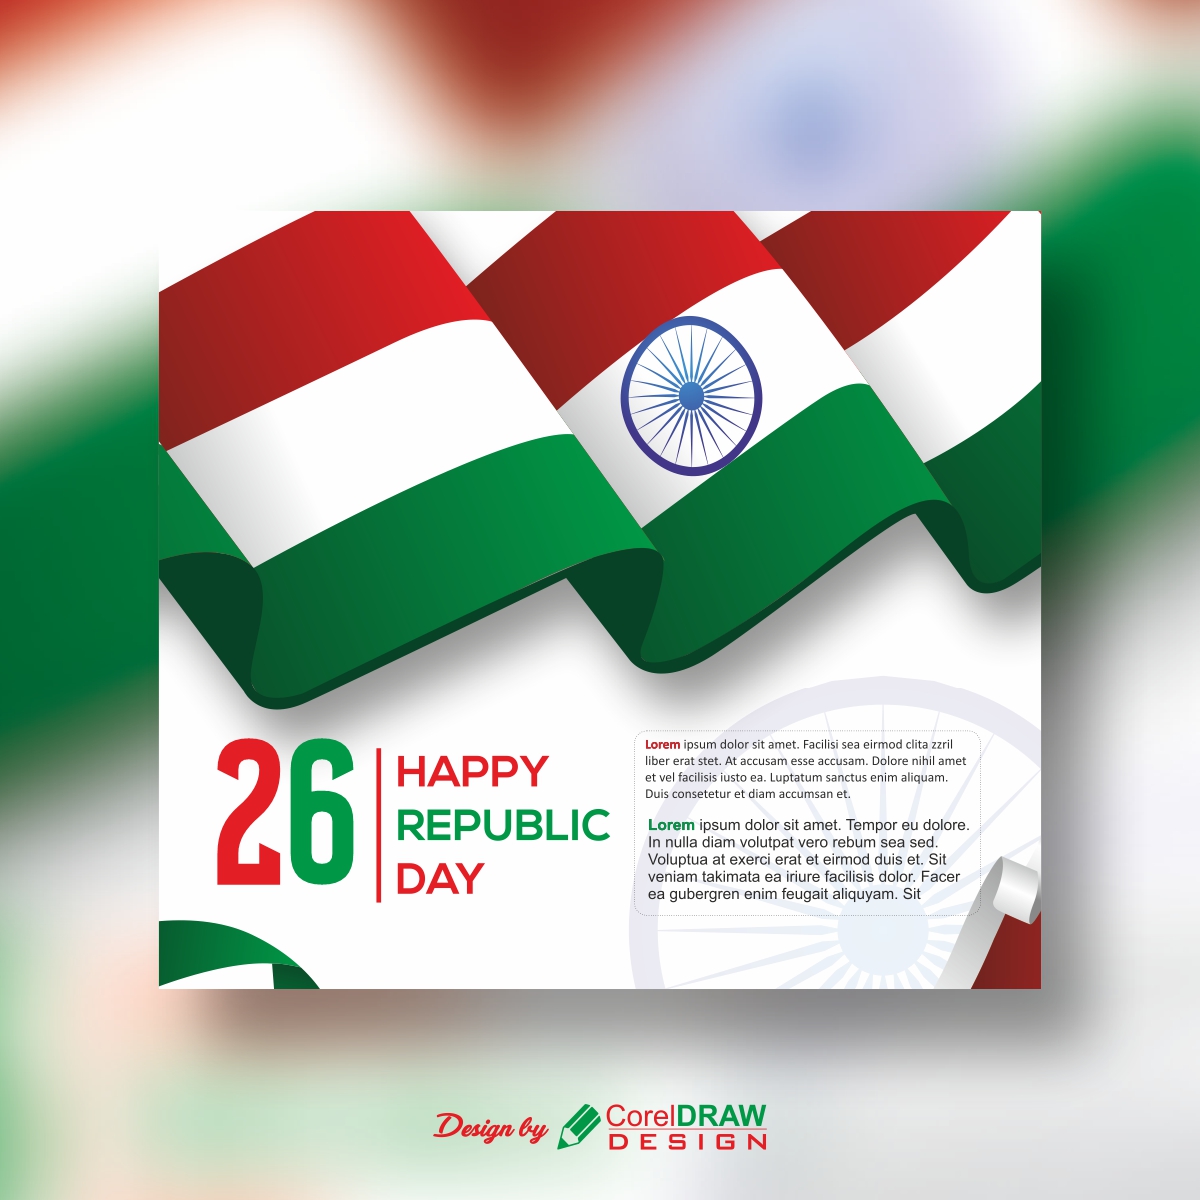 INDIA Republic day 26 JANUARY